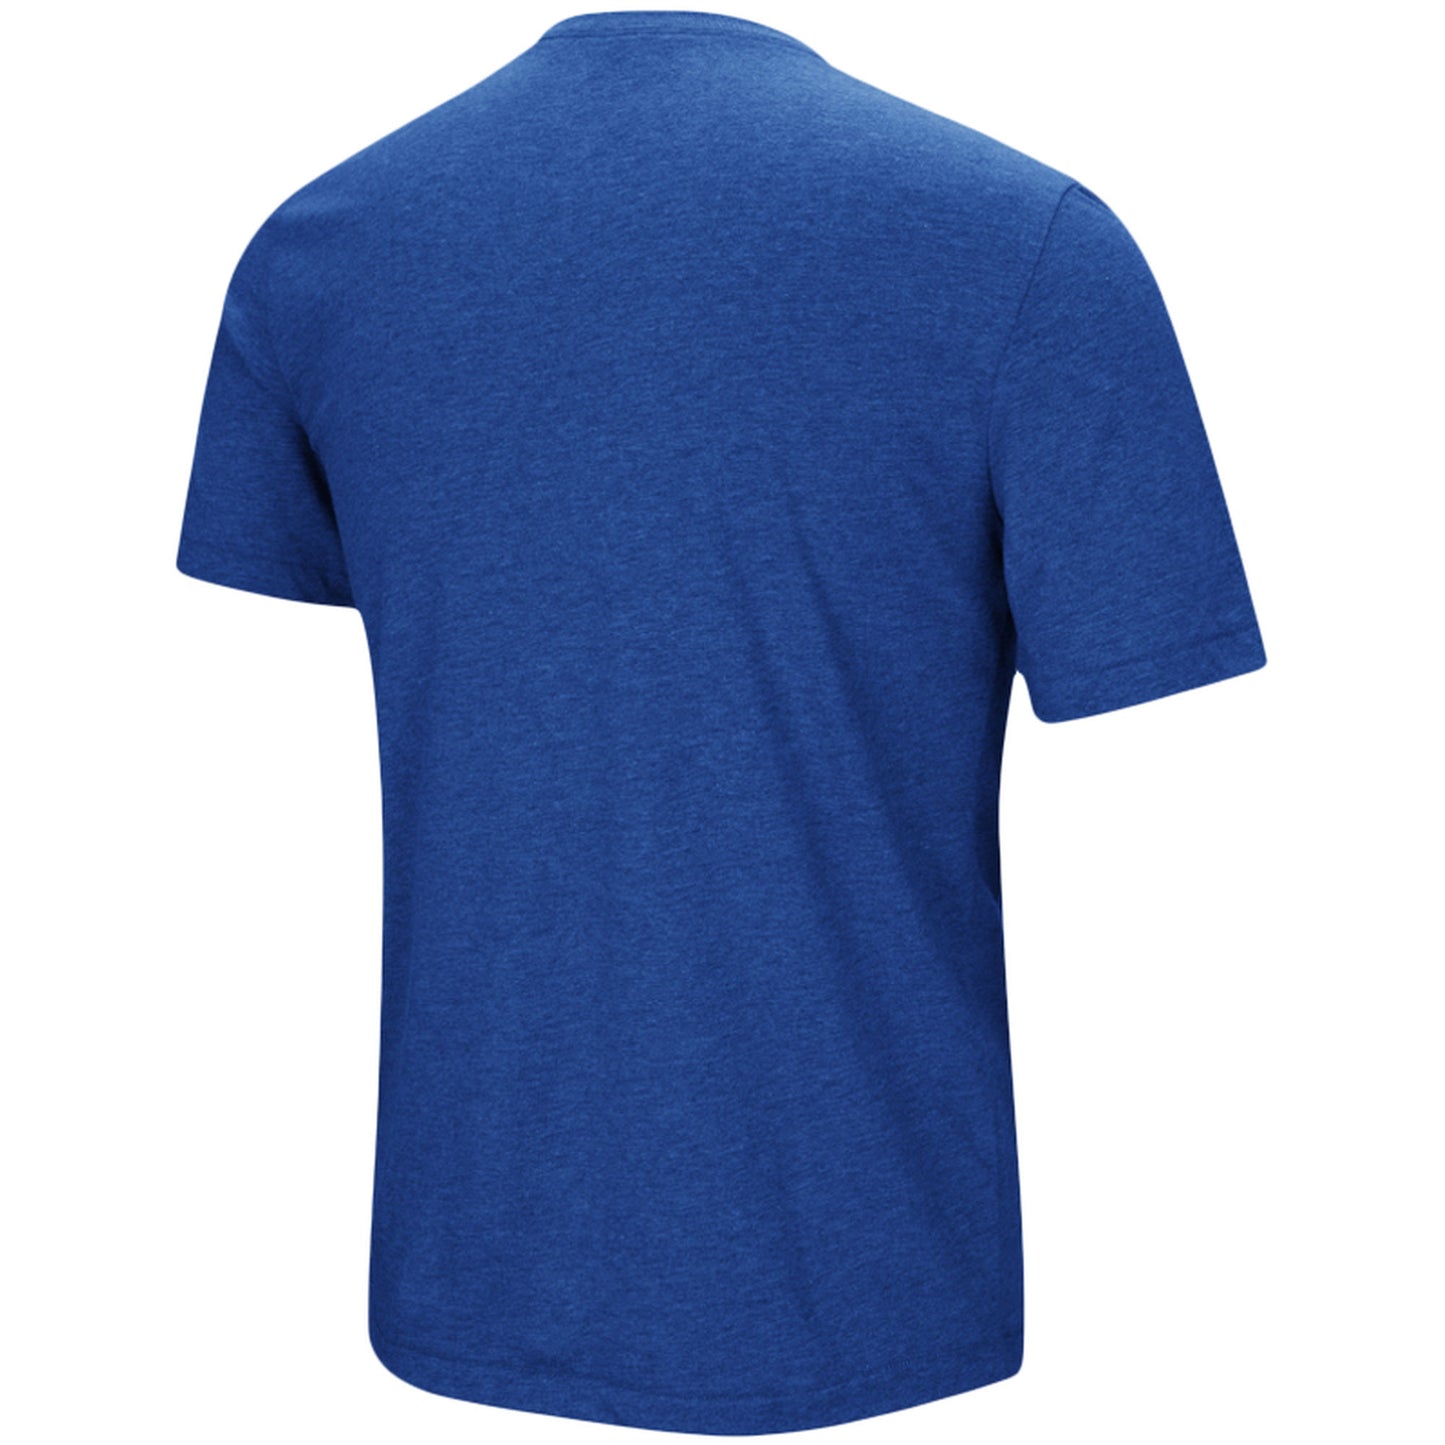 Men's Chicago Cubs Under Armour Heathered Royal Stripe Logo Tri-Blend T-Shirt